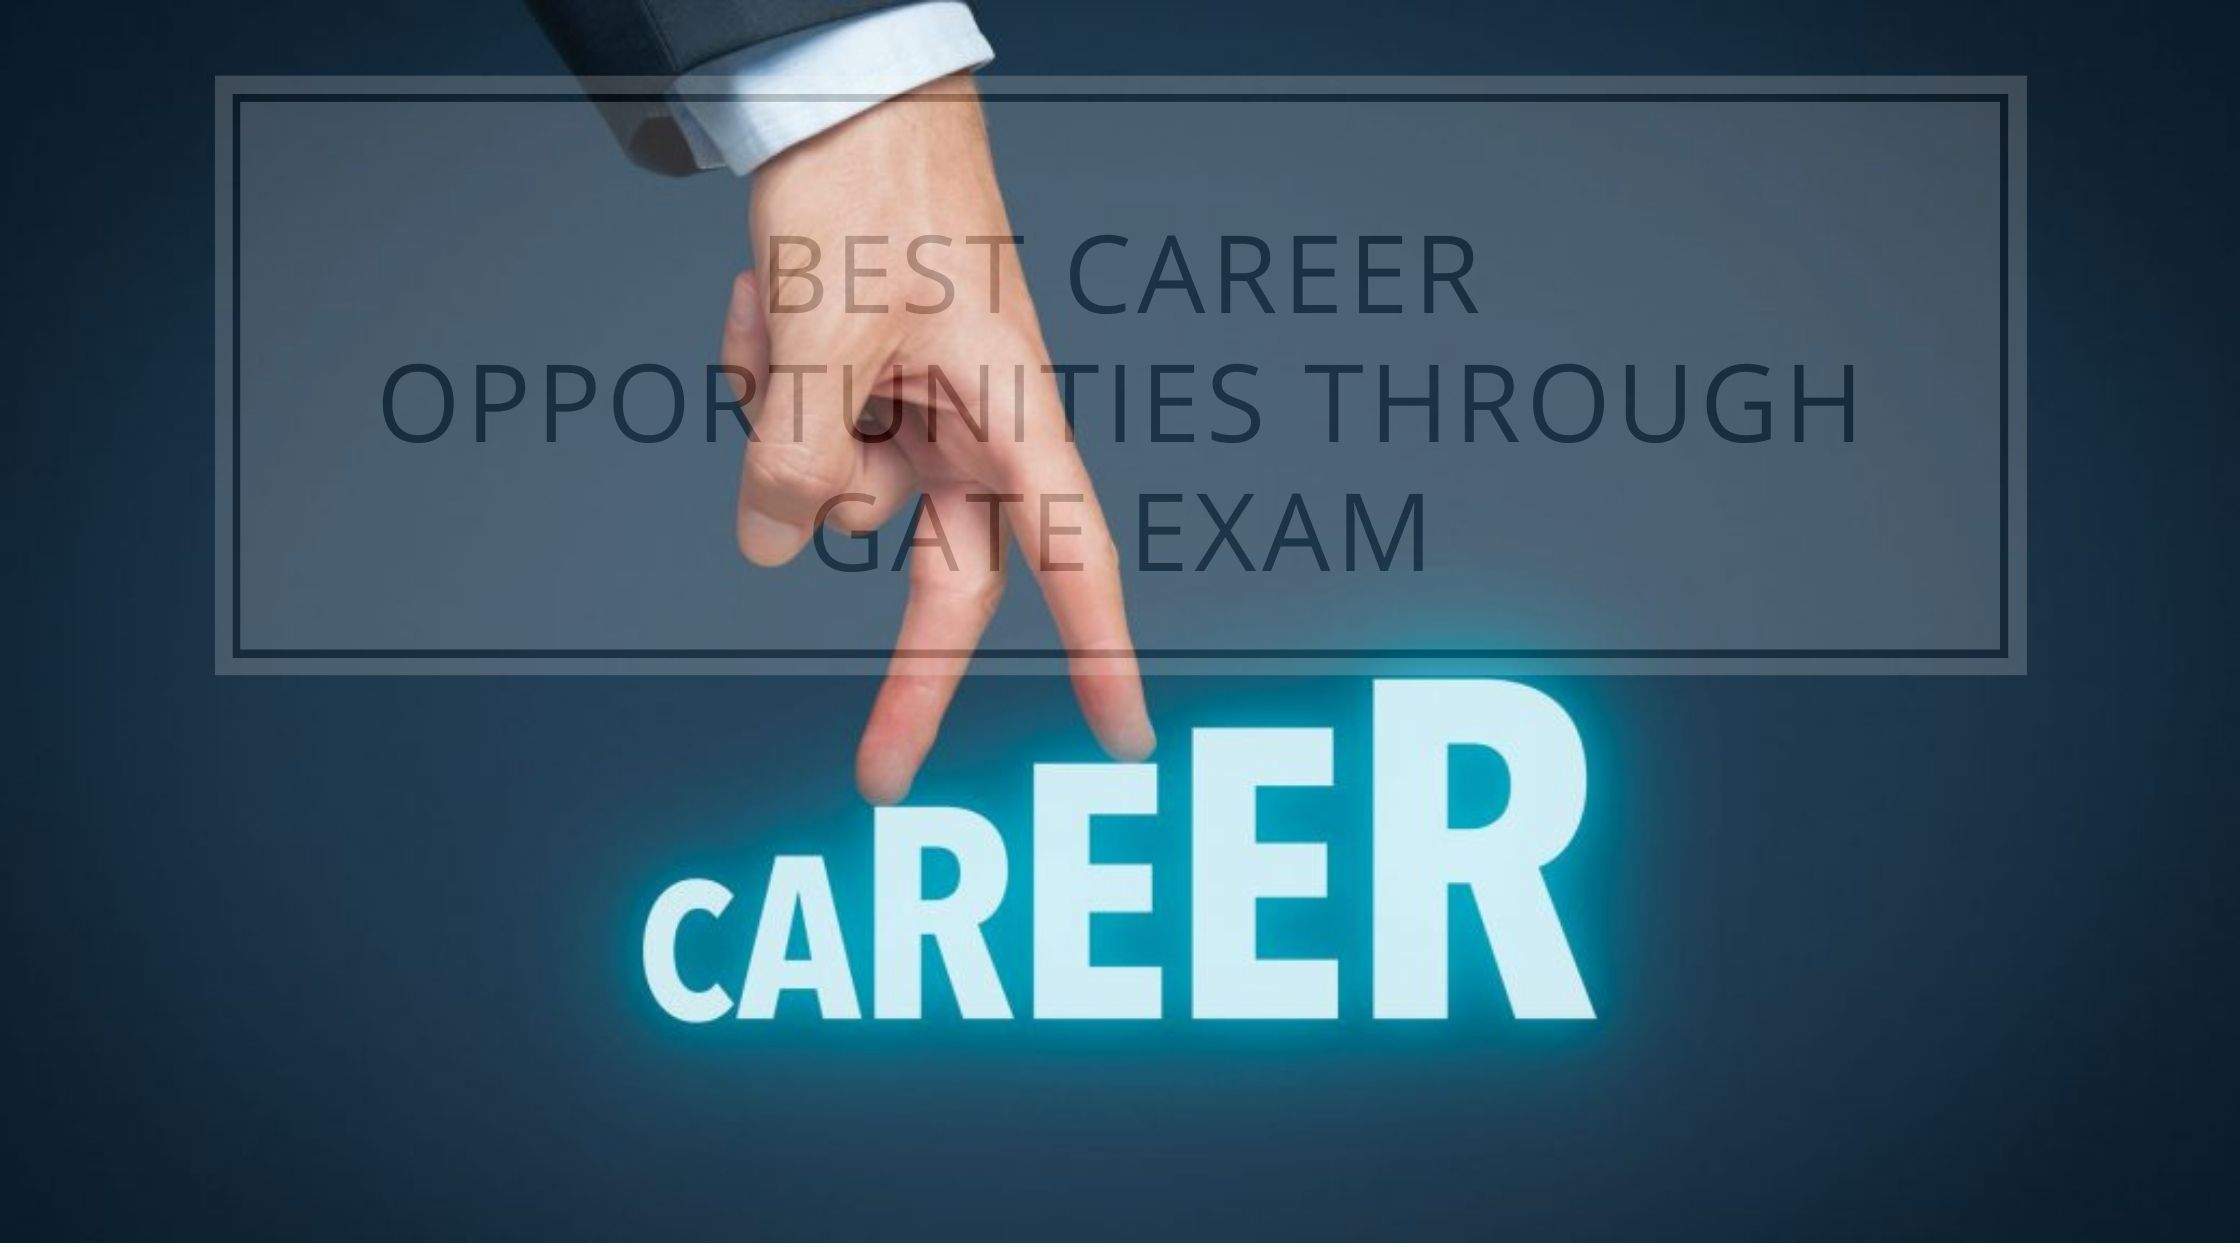 Best Career Opportunities through GATE Exam